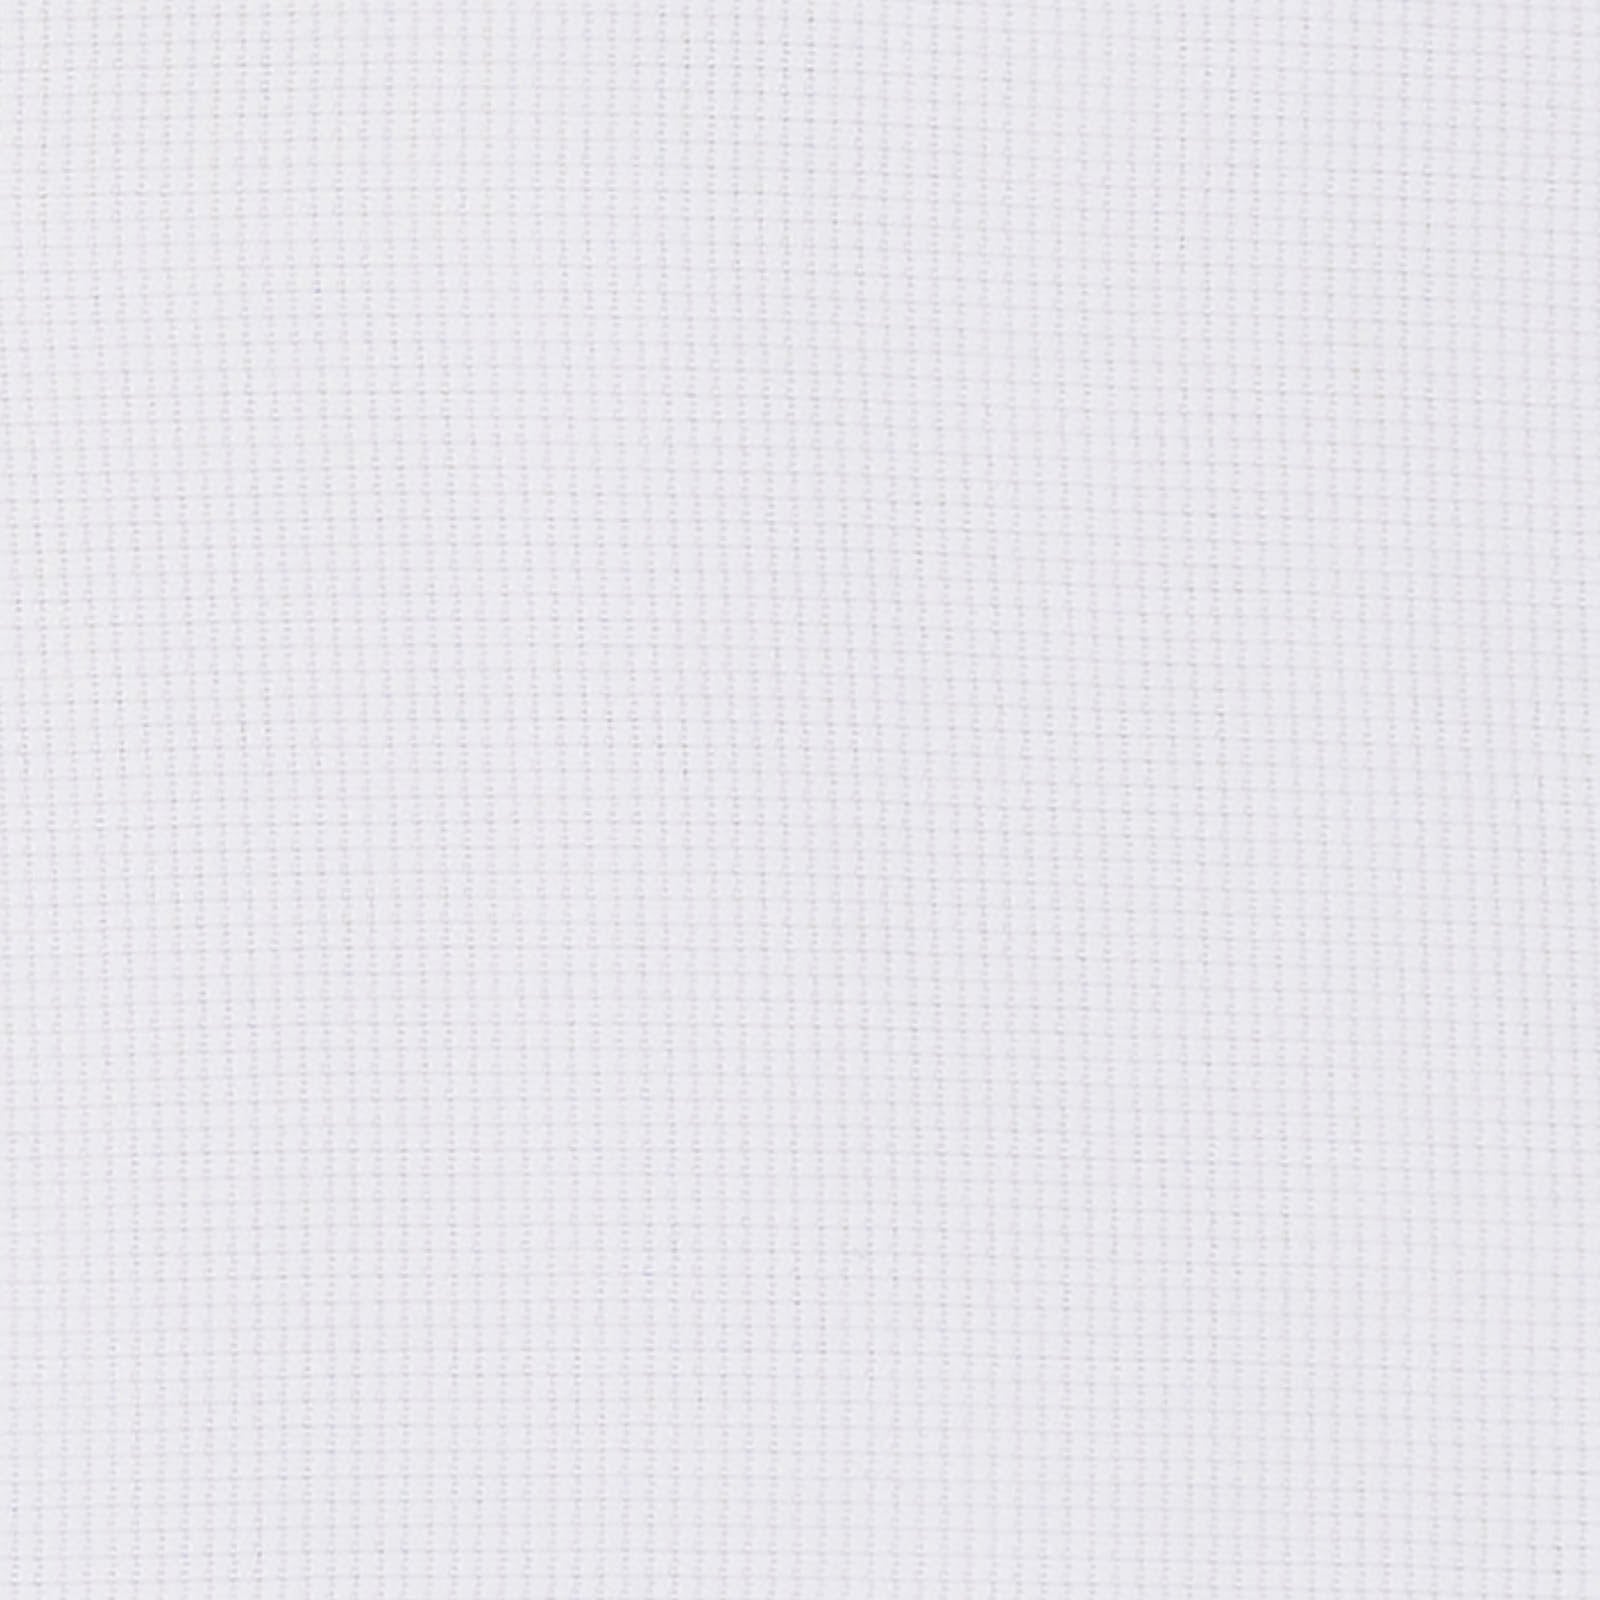 BESPOKE ATHENS Handmade White Dobby Cotton French Cuff Shirt EU 38 NEW US 15